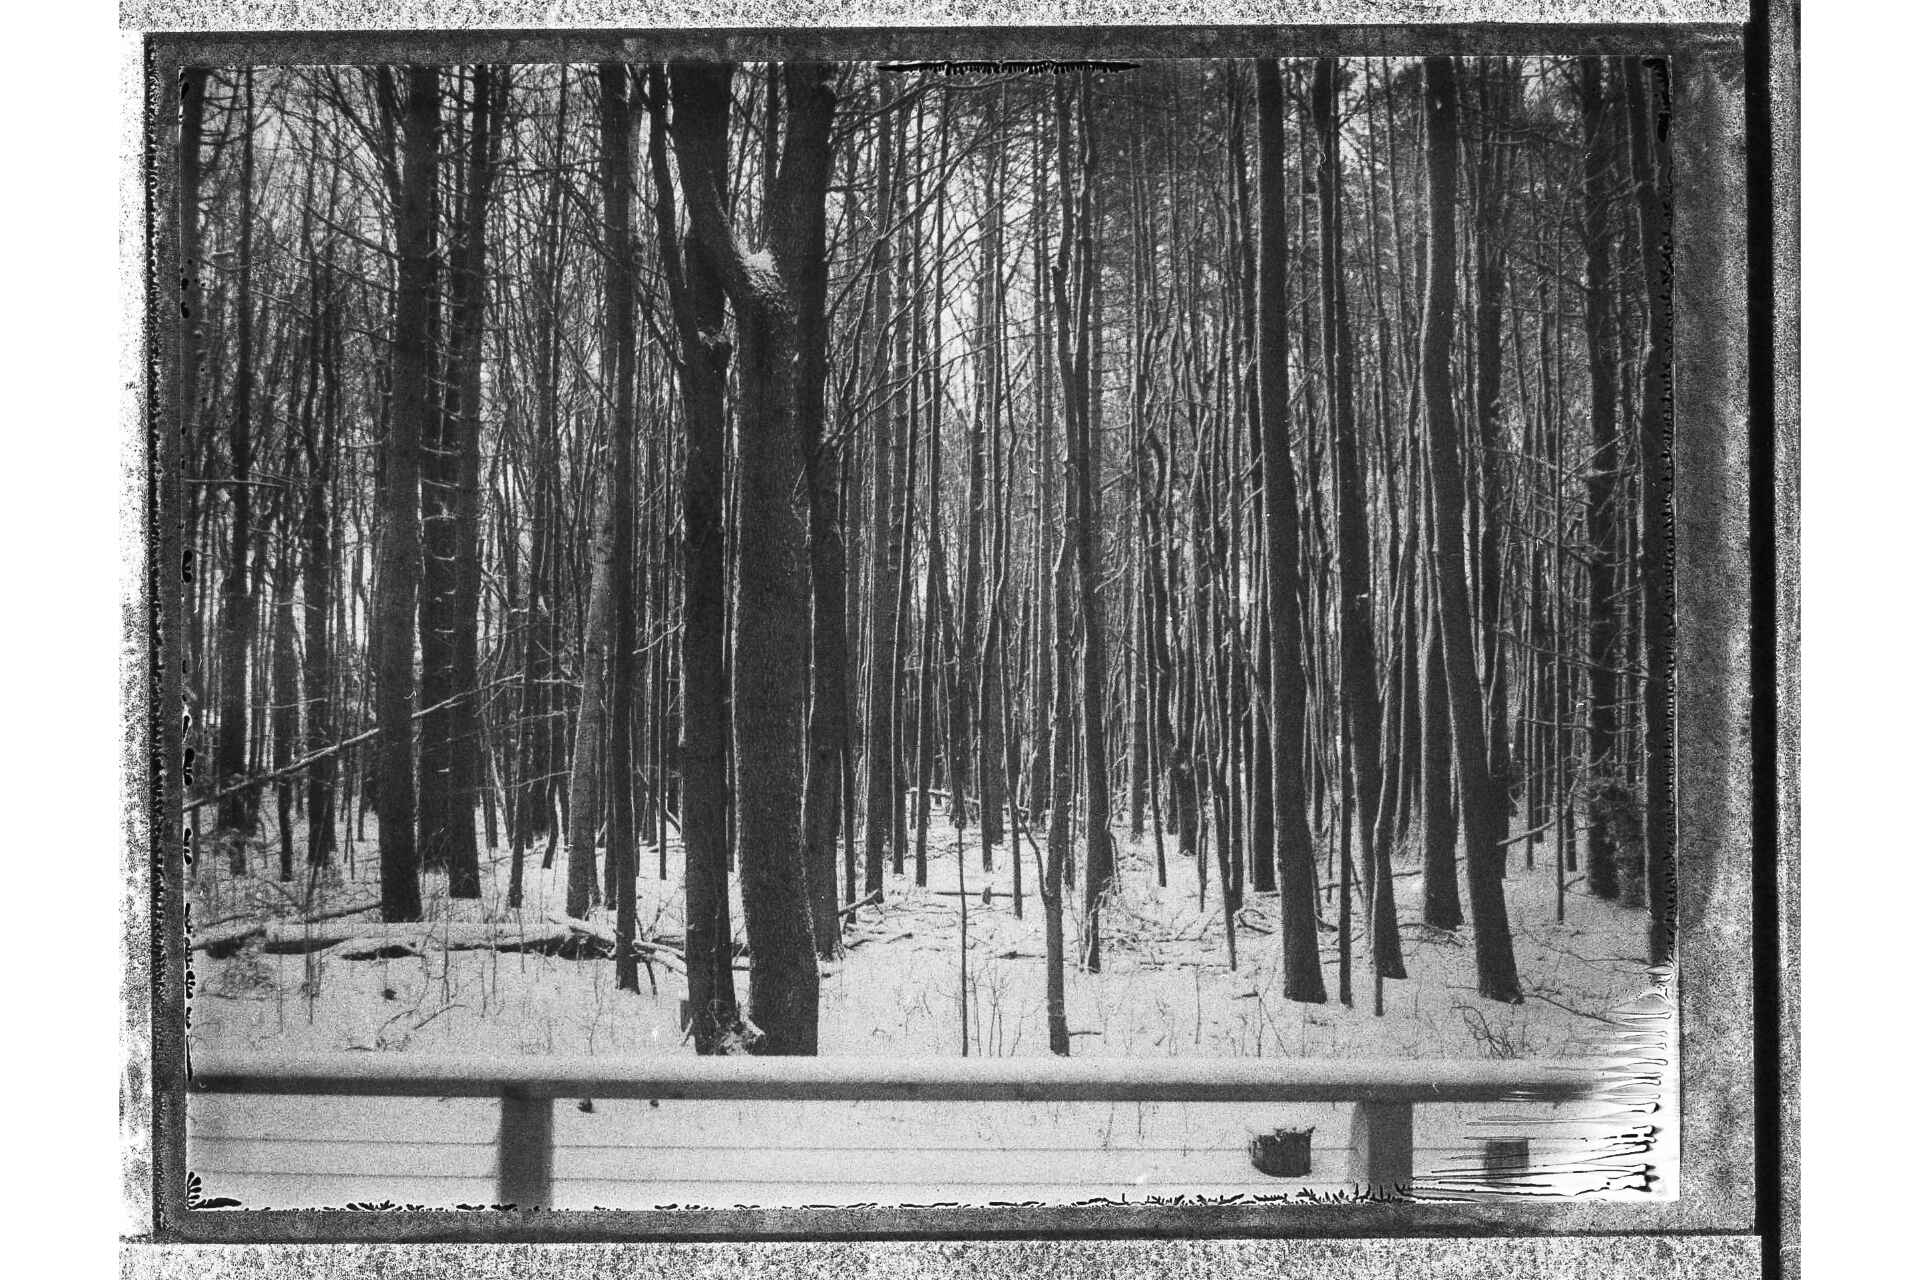 Woods shot in black and white FB-3000b film